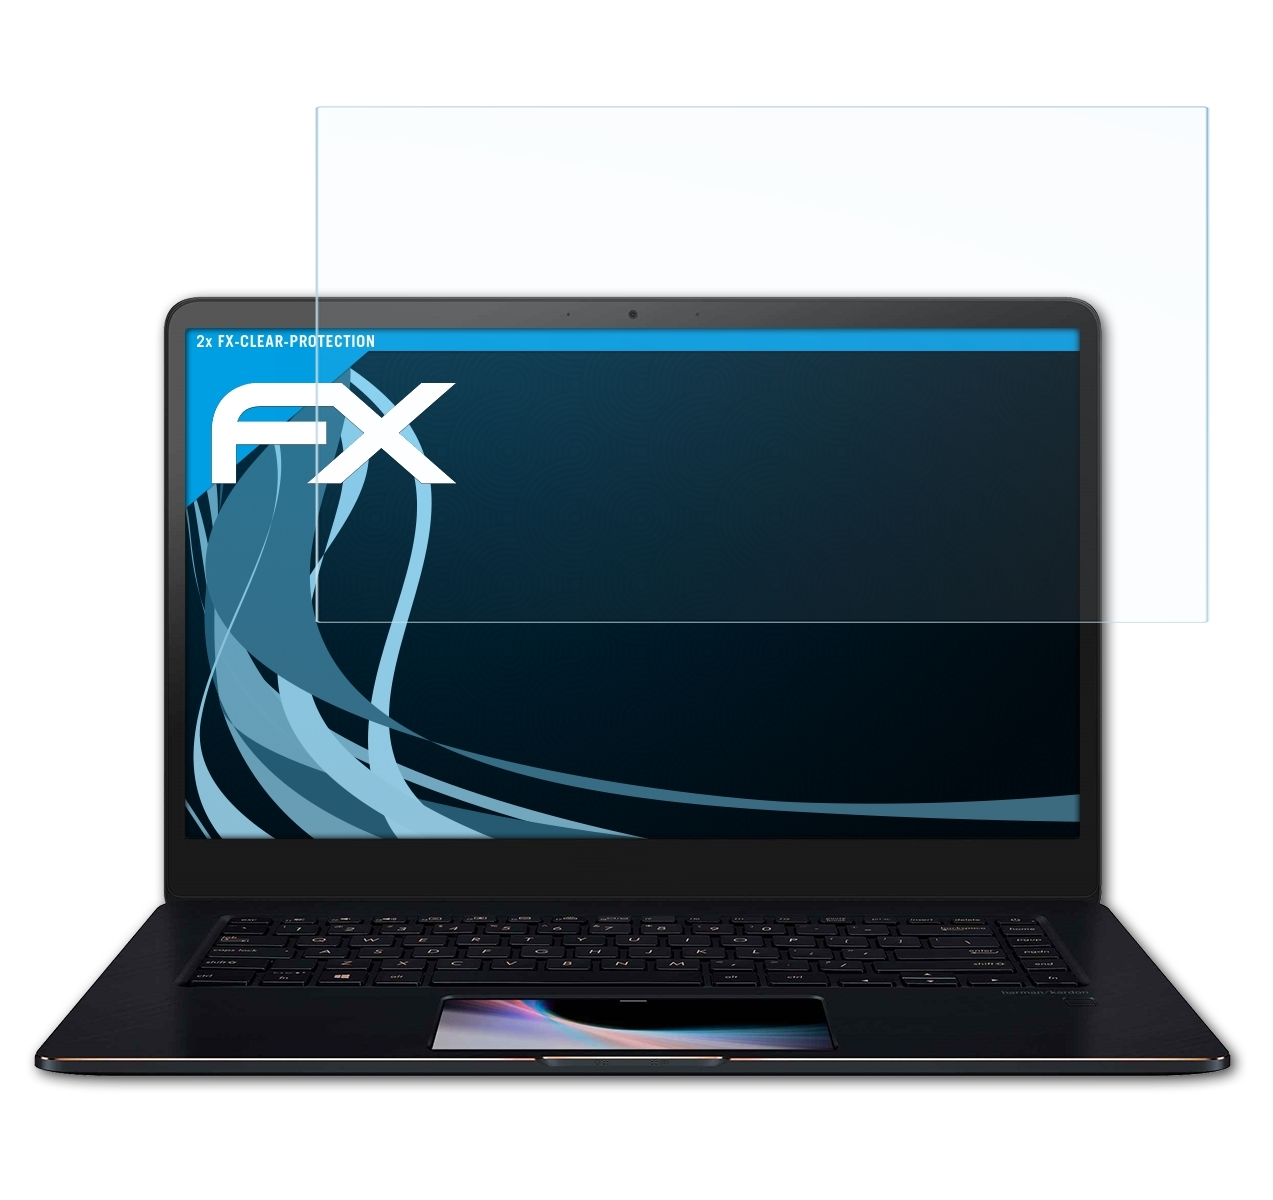 ATFOLIX 2x ZenBook Pro Displayschutz(für (UX550GD)) 15 FX-Clear Asus